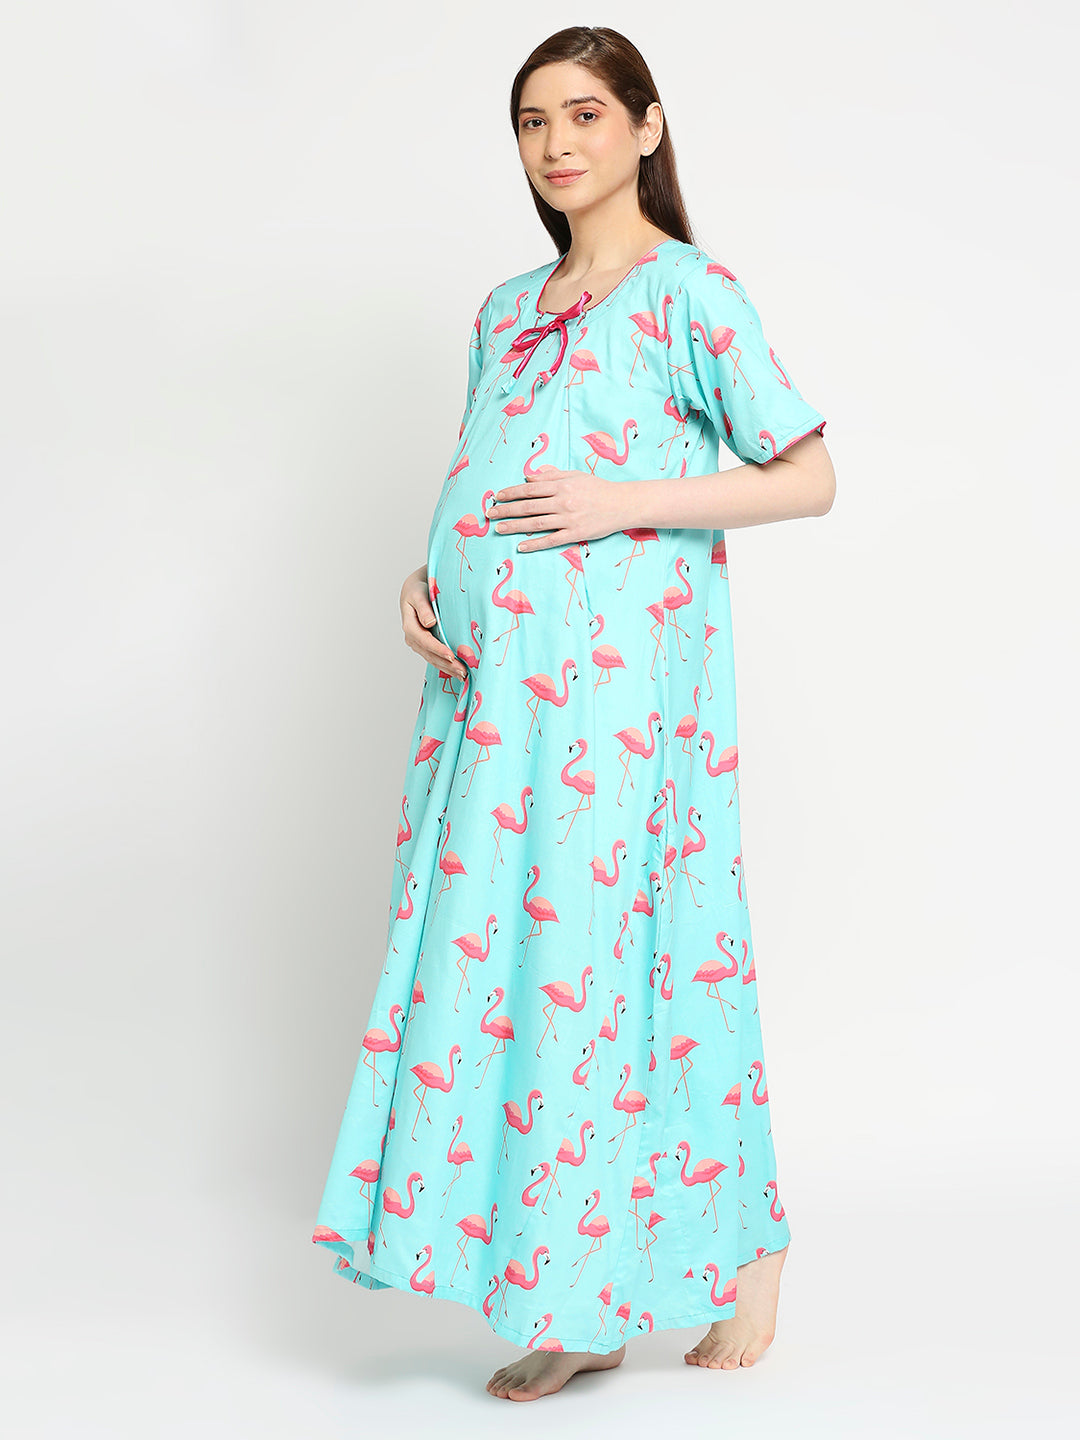 fcity.in - Kk Fashion Woman Pure Cotton Maternity Gownmaternity Wearfeeding